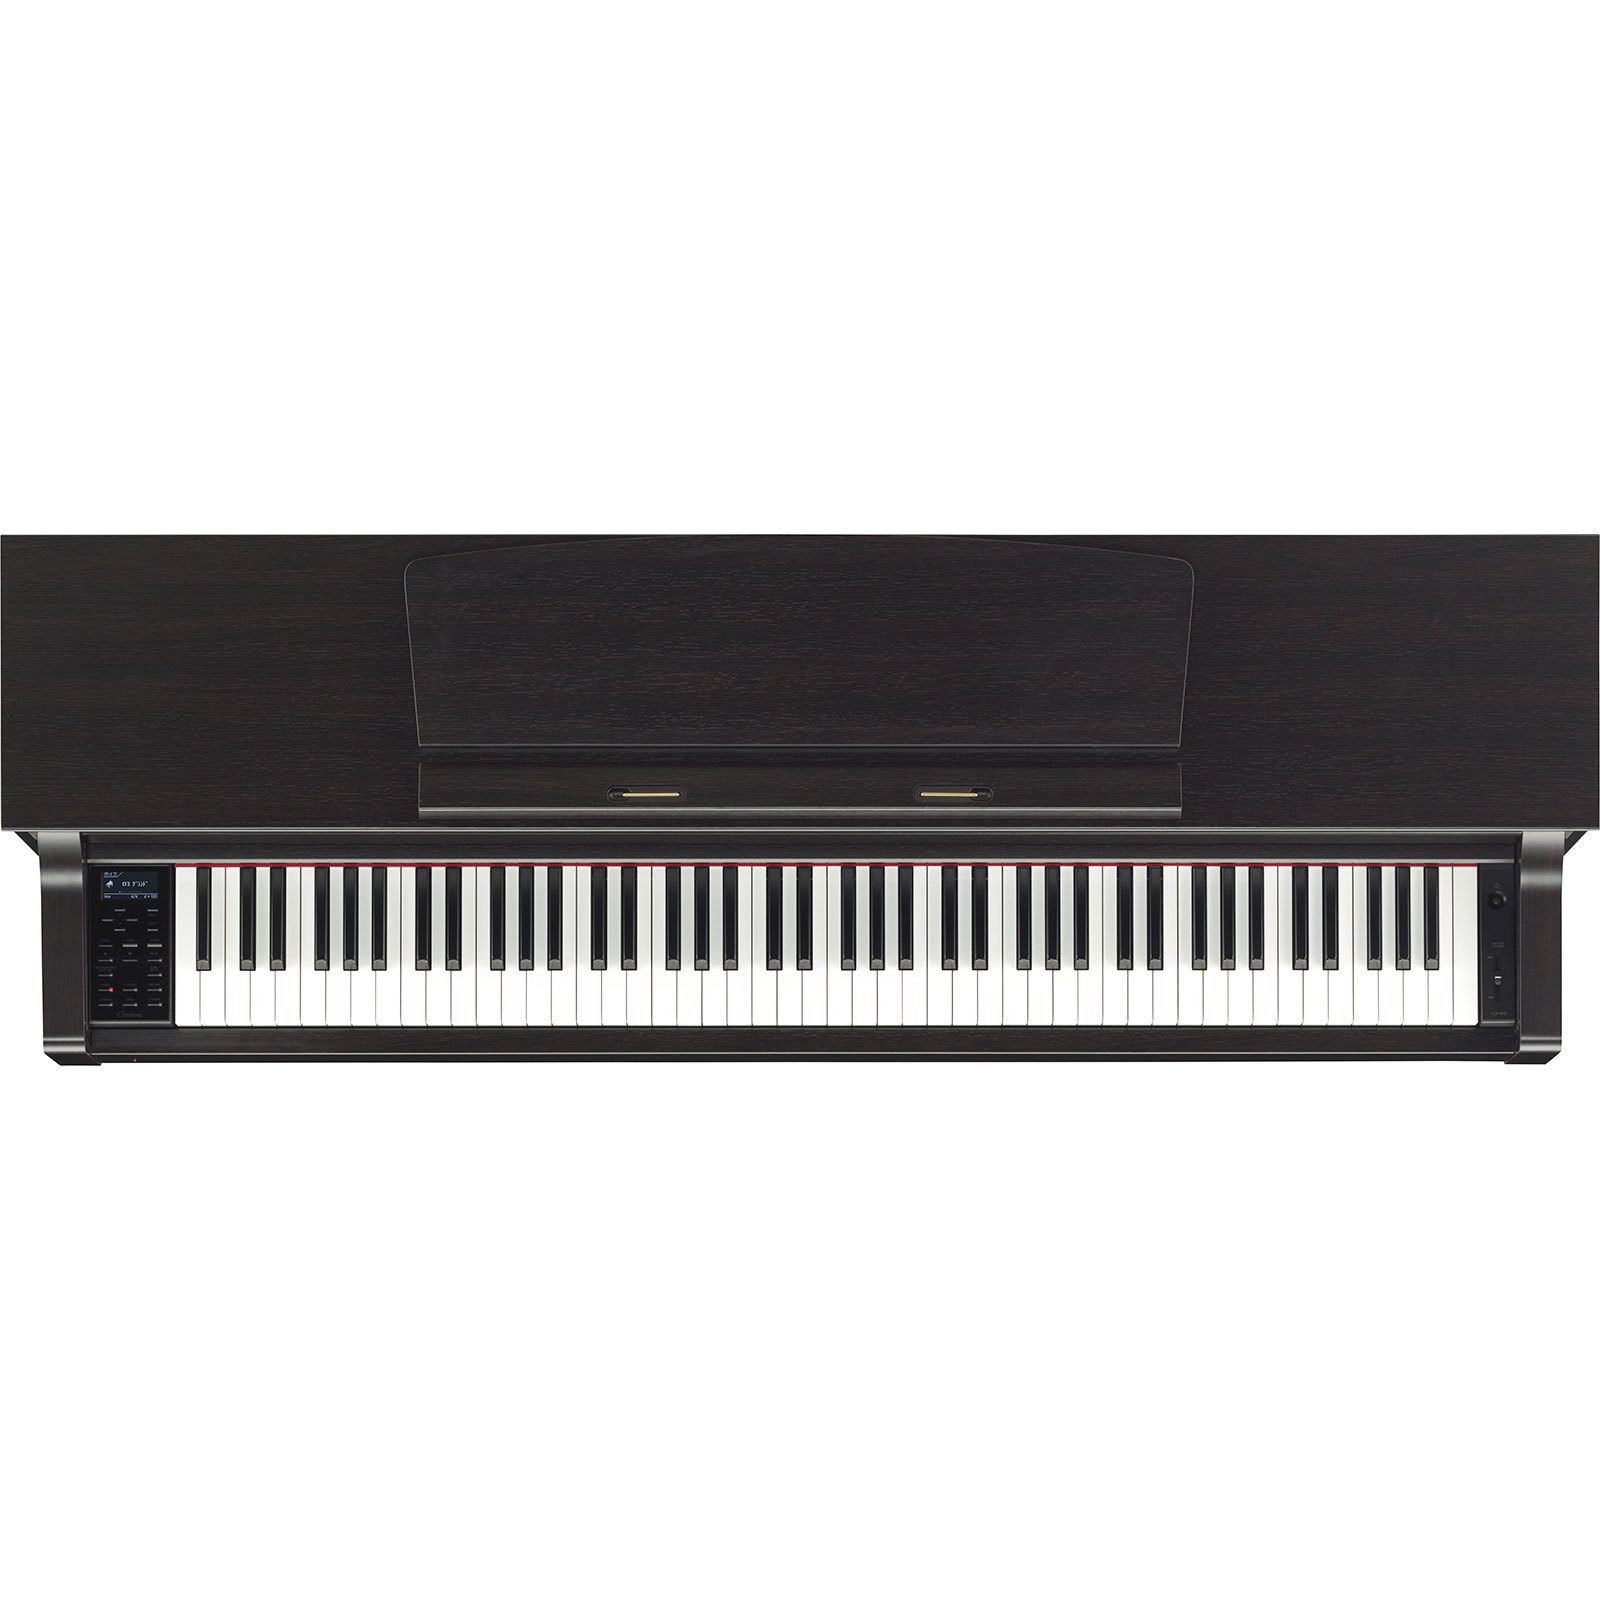 CLP-575 - Overview - Clavinova - Pianos - Musical Instruments 